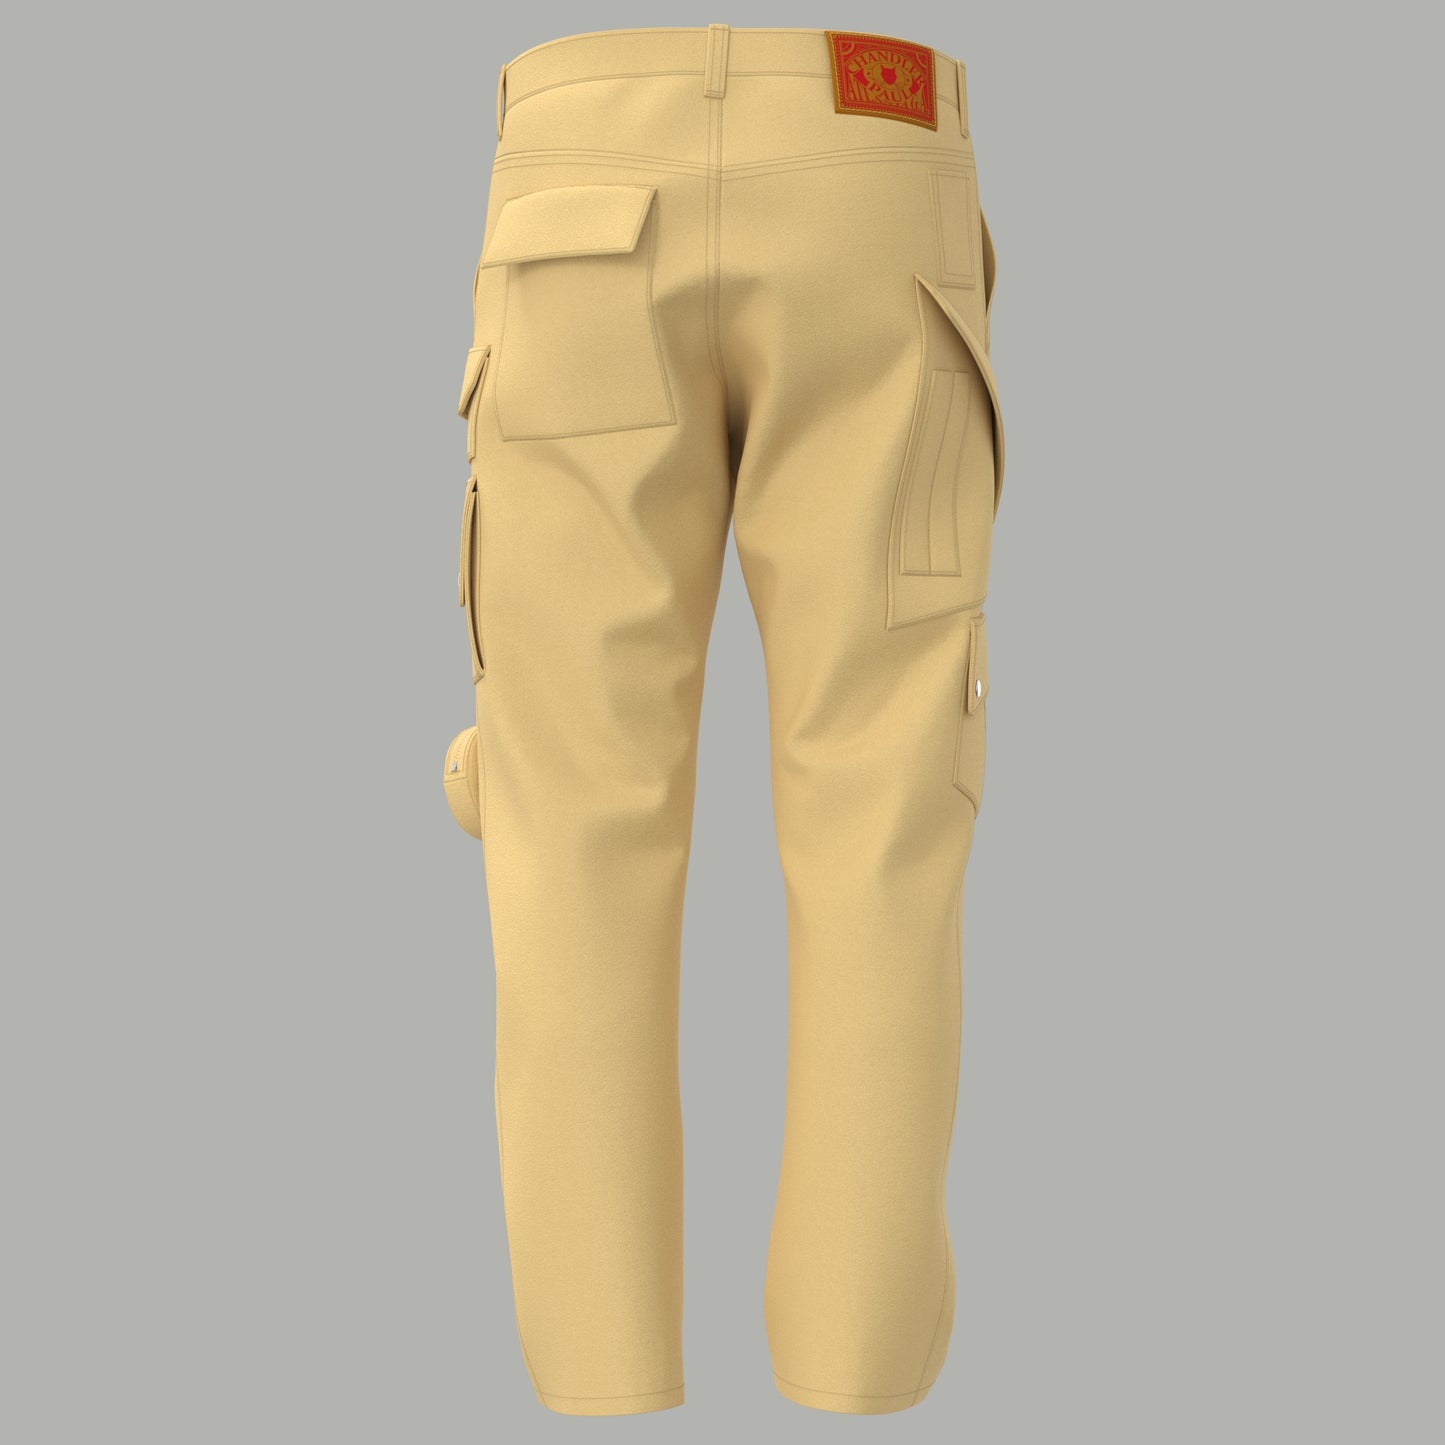 Khaki Asyme Cargo Pants